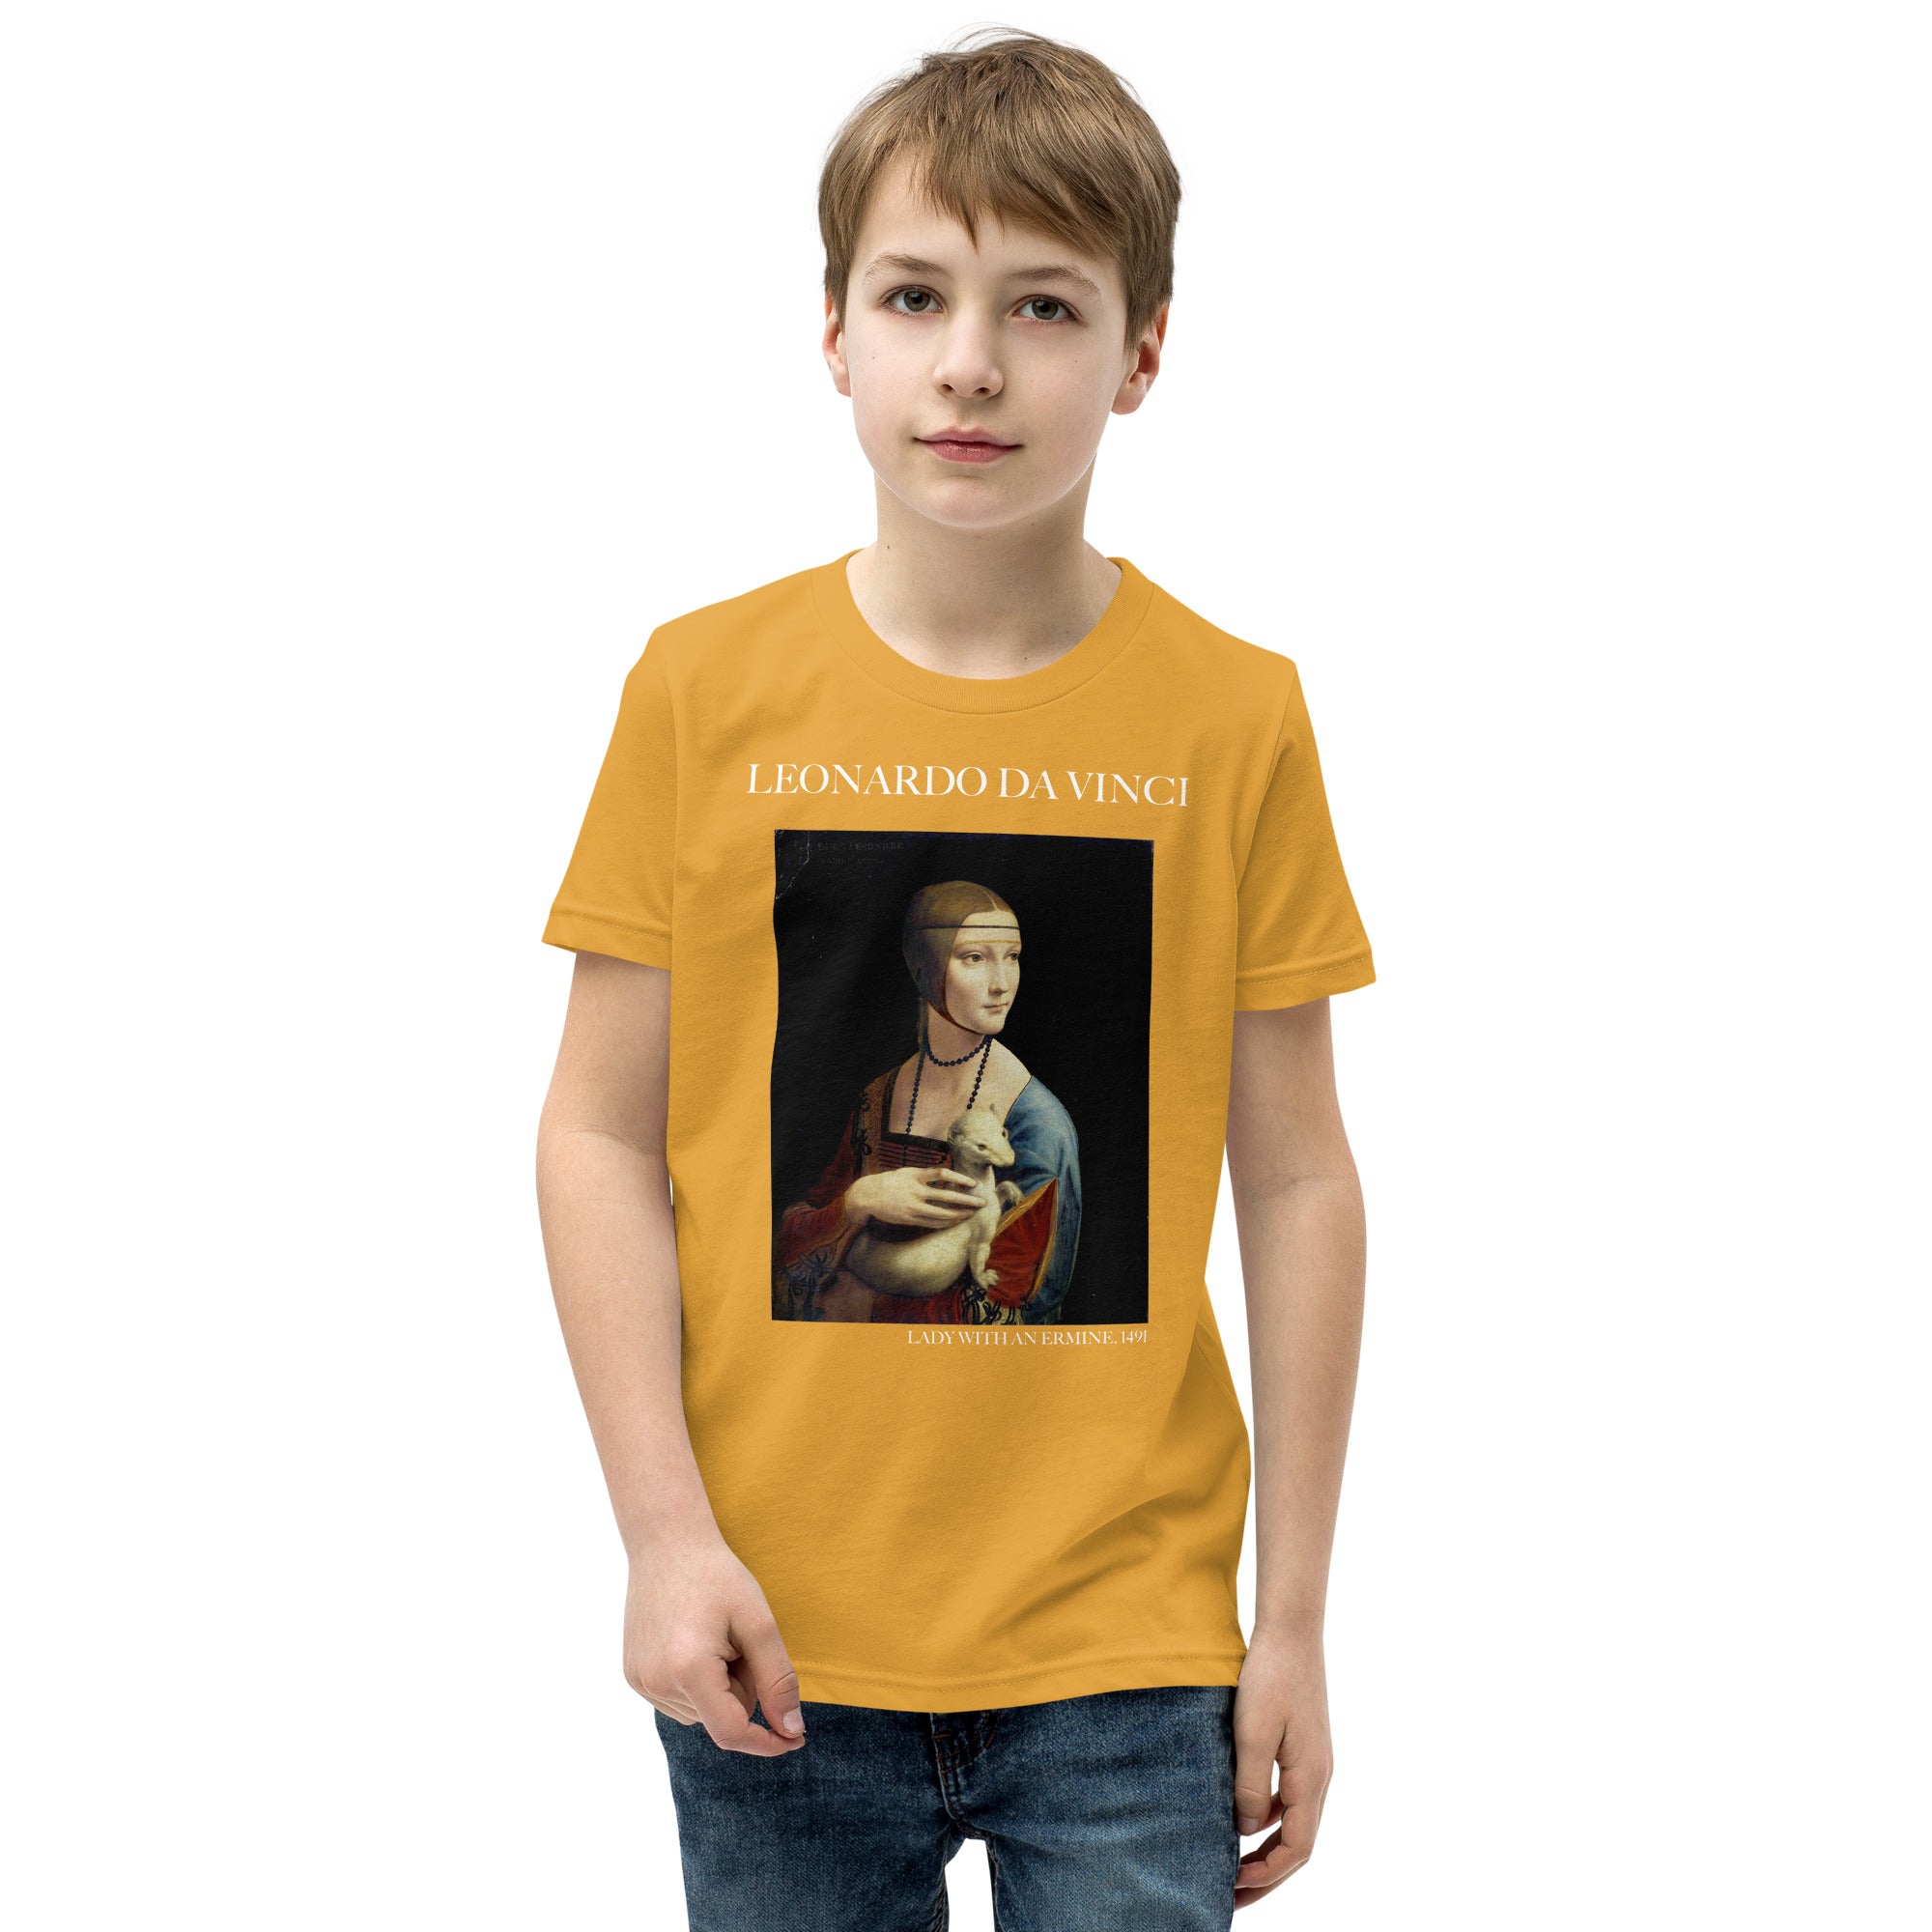 Leonardo da Vinci 'Lady with an Ermine' Famous Painting Short Sleeve T-Shirt | Premium Youth Art Tee